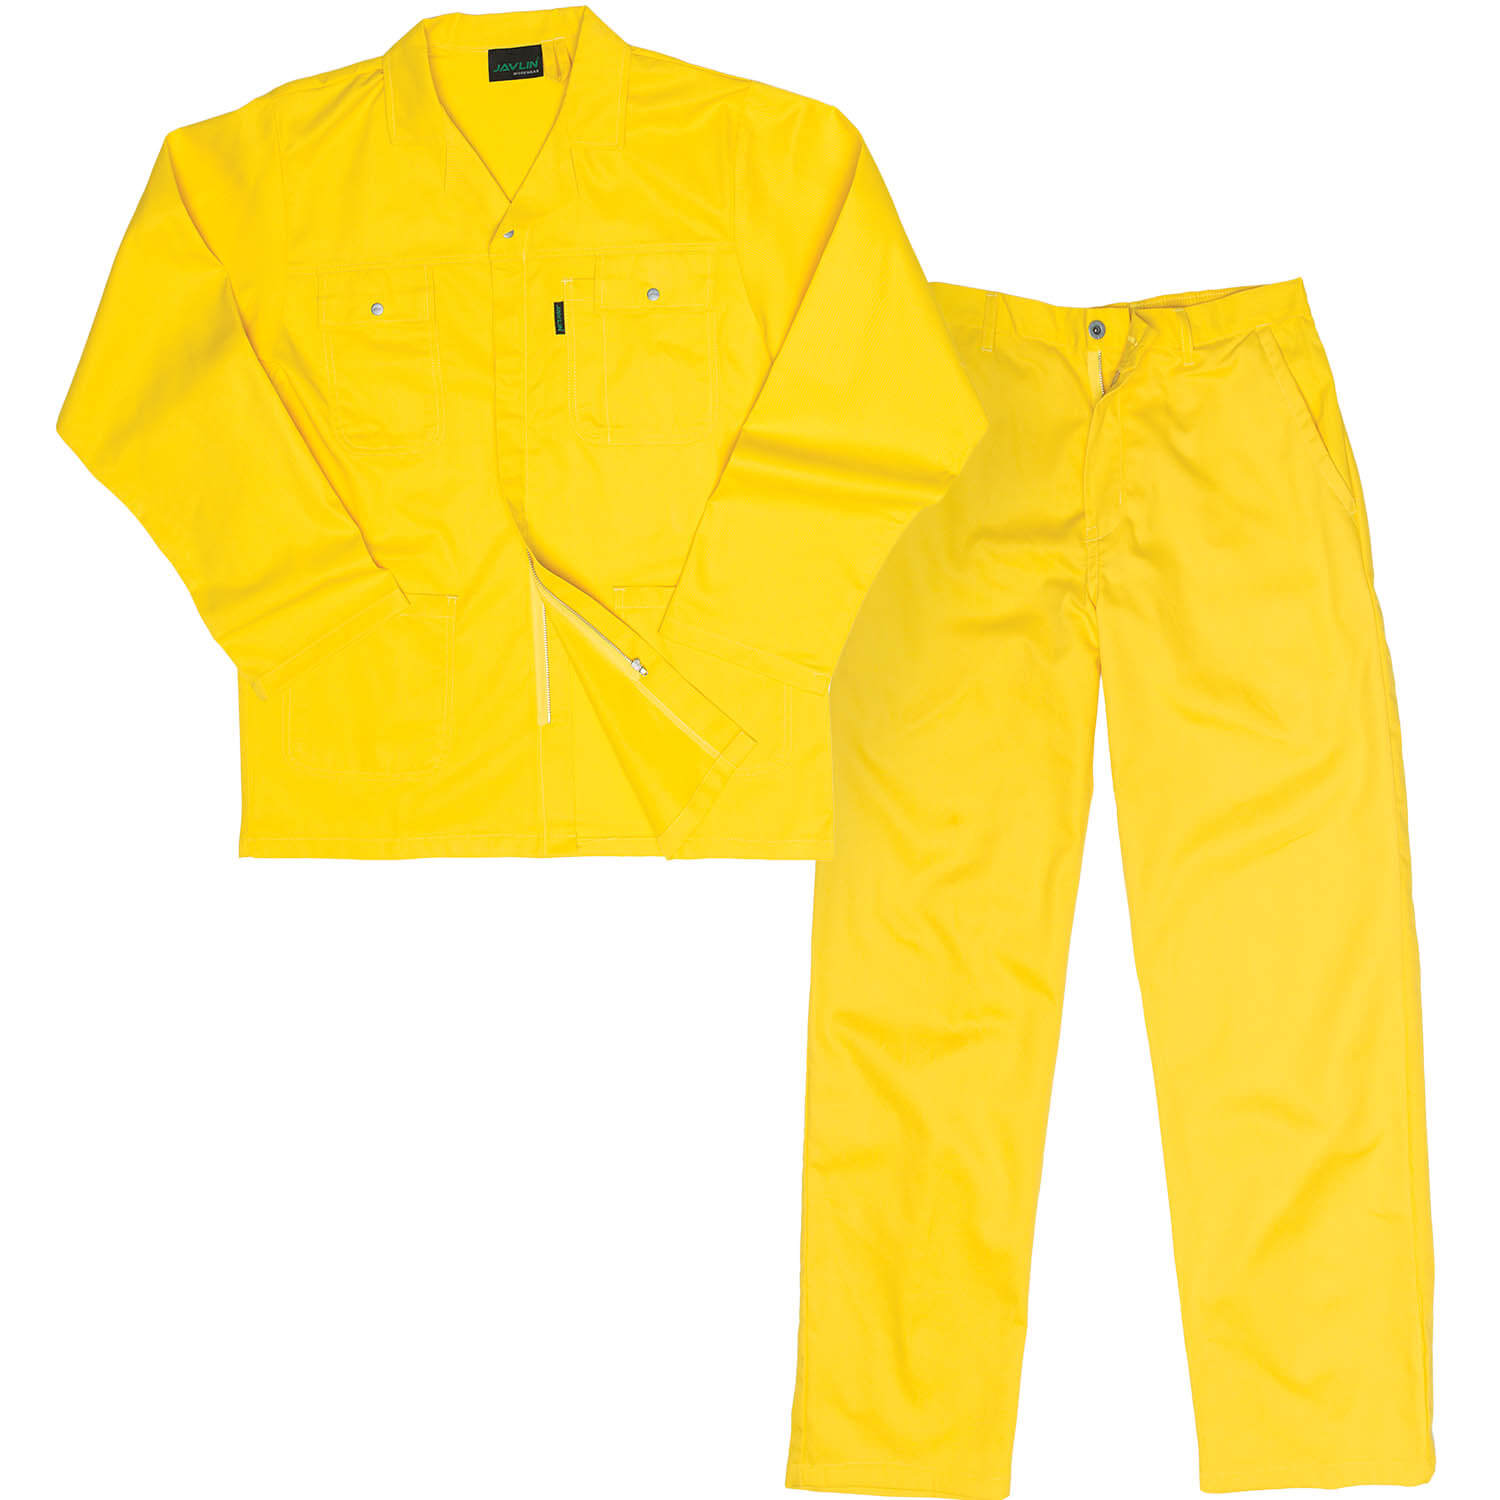 4014YEPC34 Polycotton Conti Suit Yellow